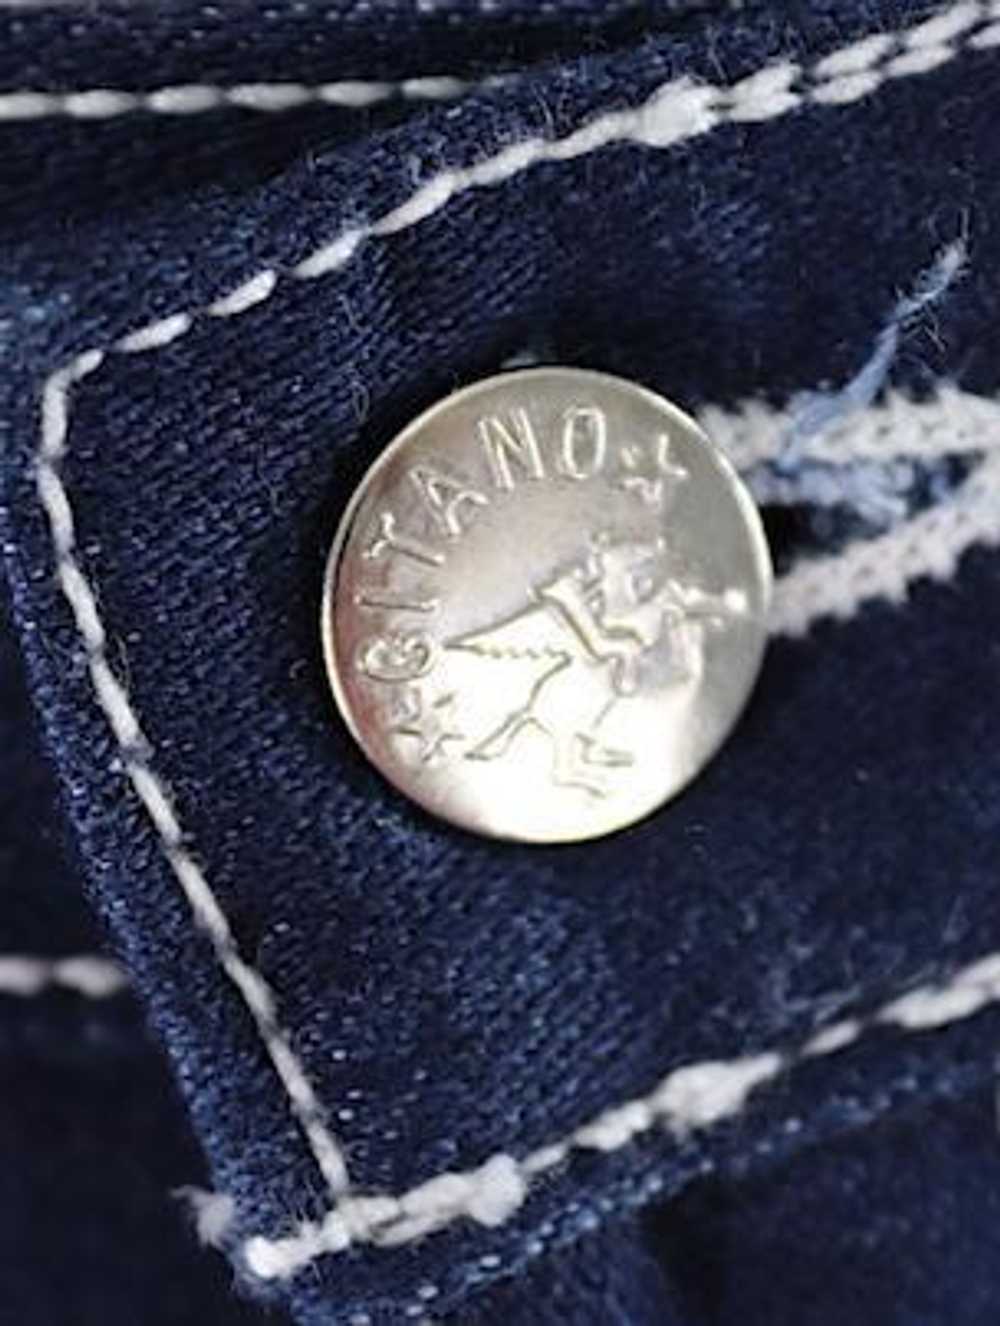 Vintage 1980s Gitano Jeans with Original Tags - image 6